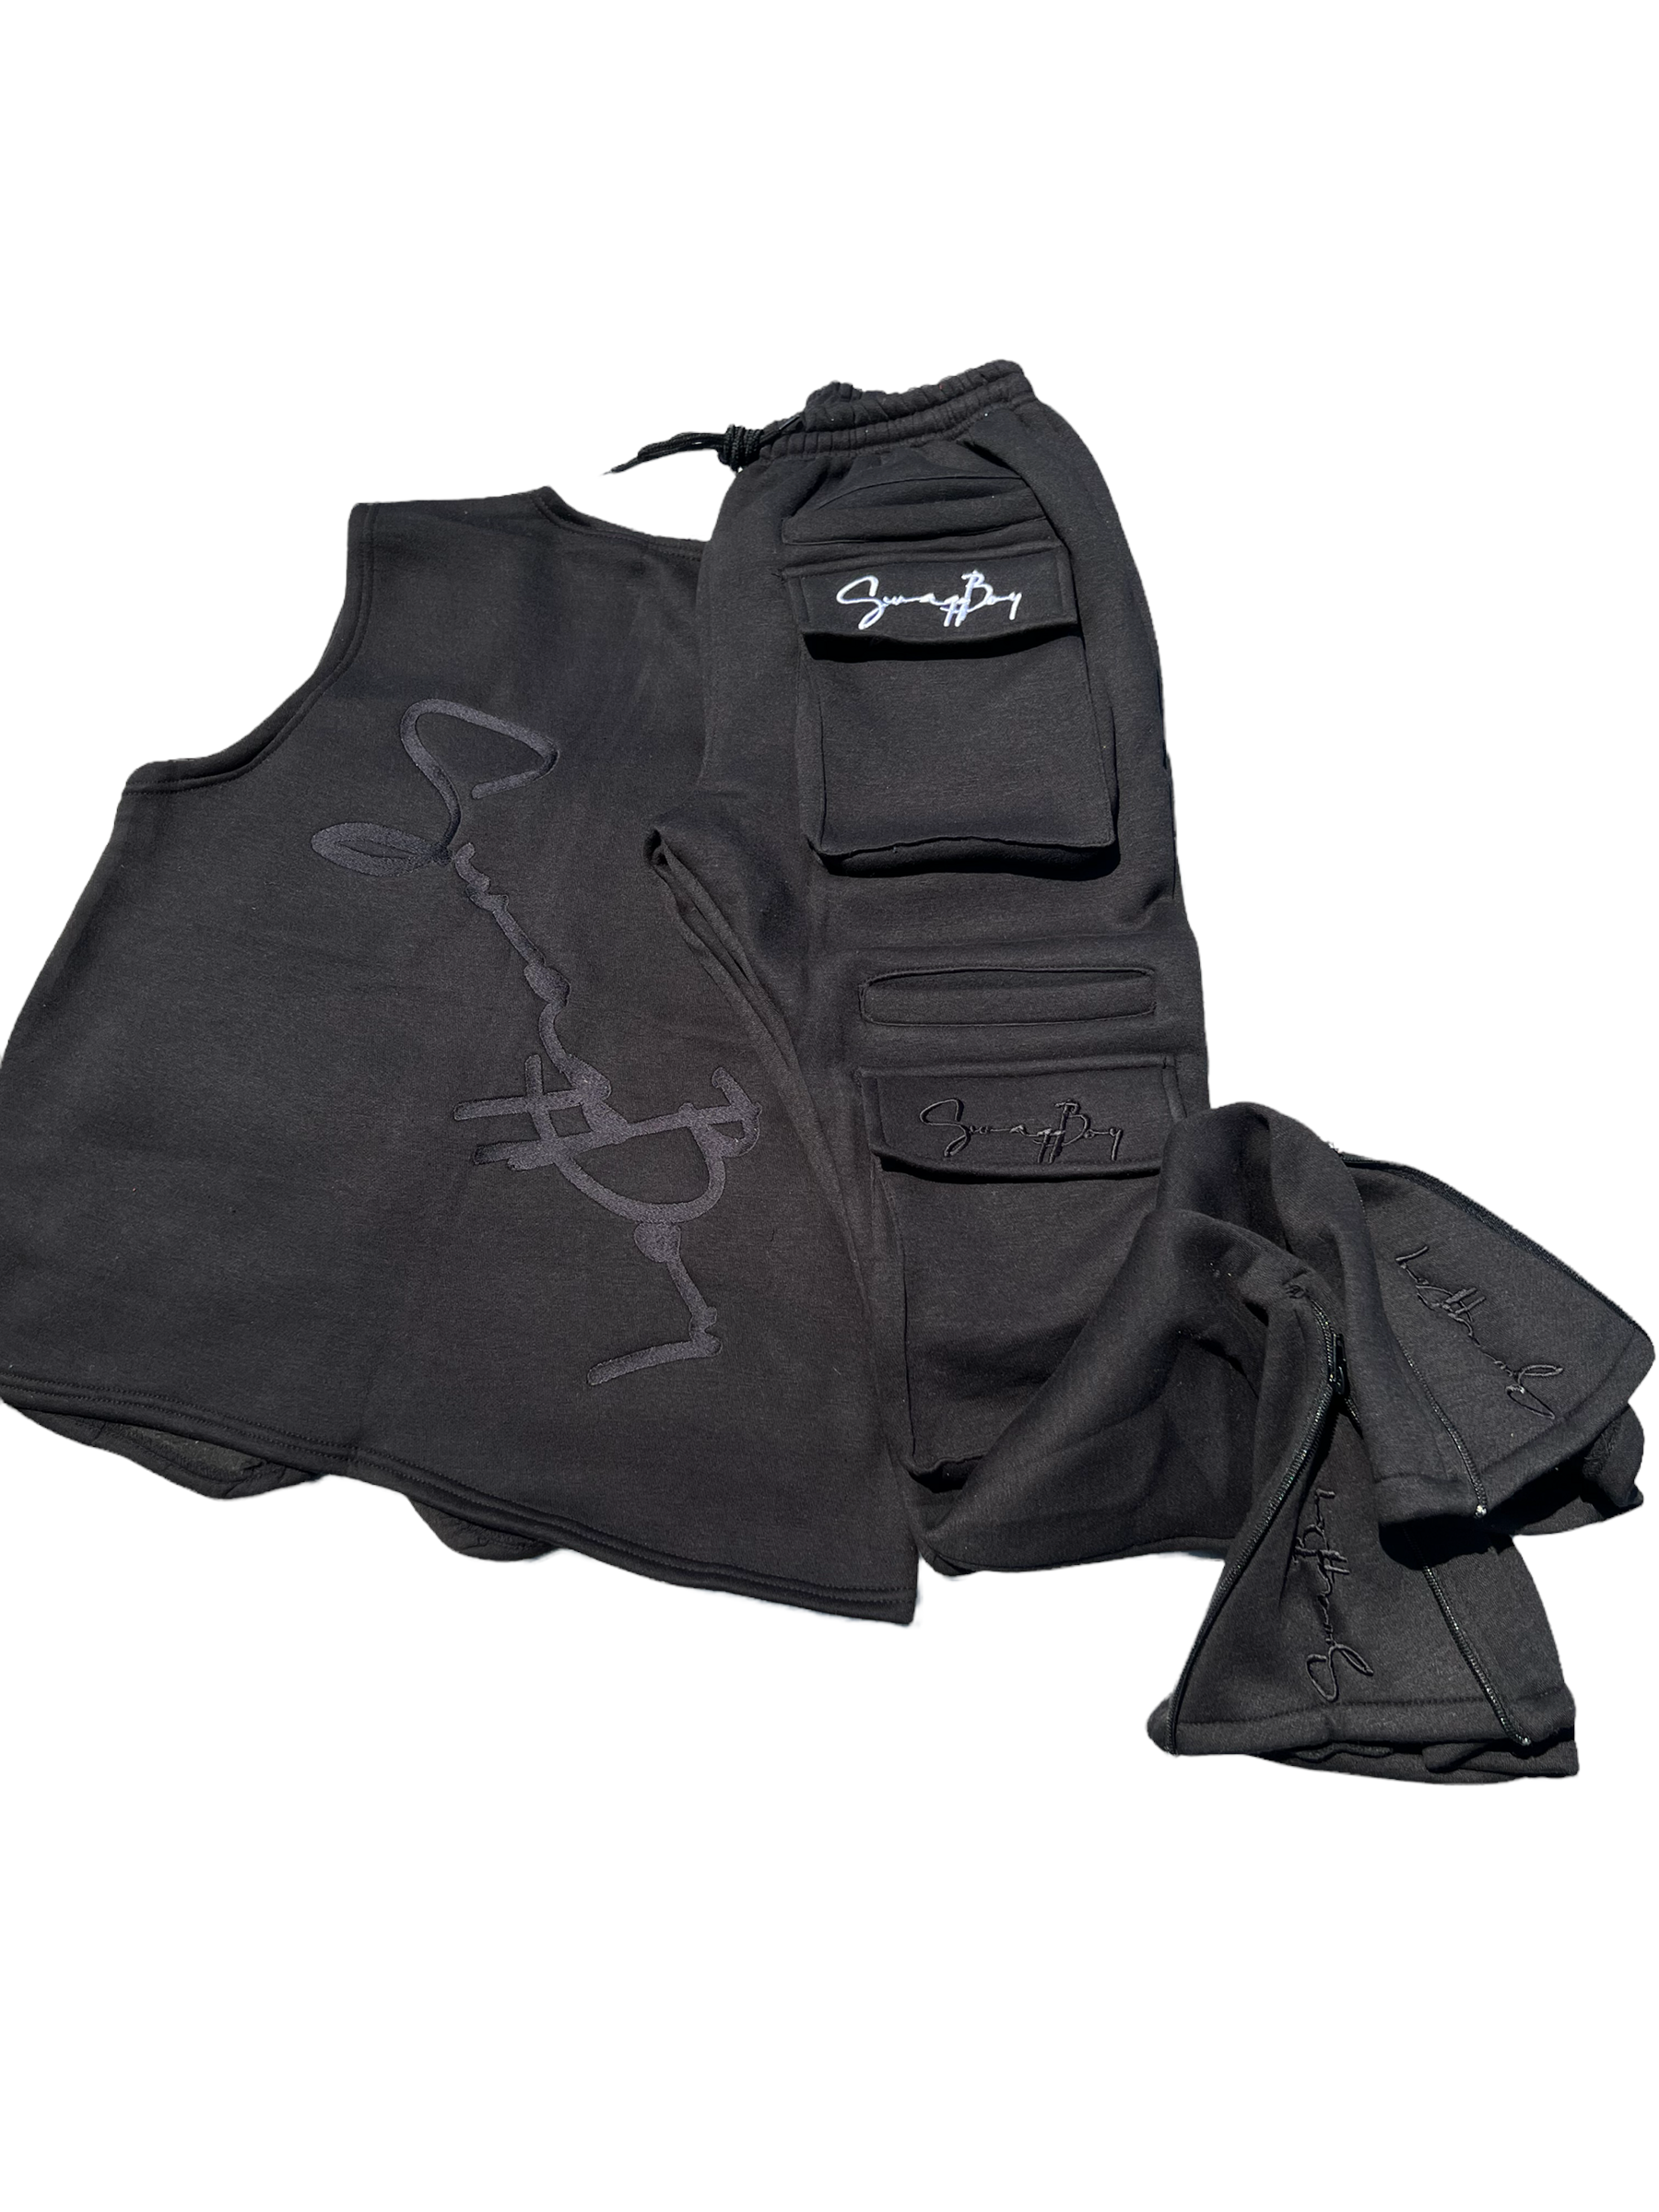 SwaggBoy Signature Cargo Vest Set